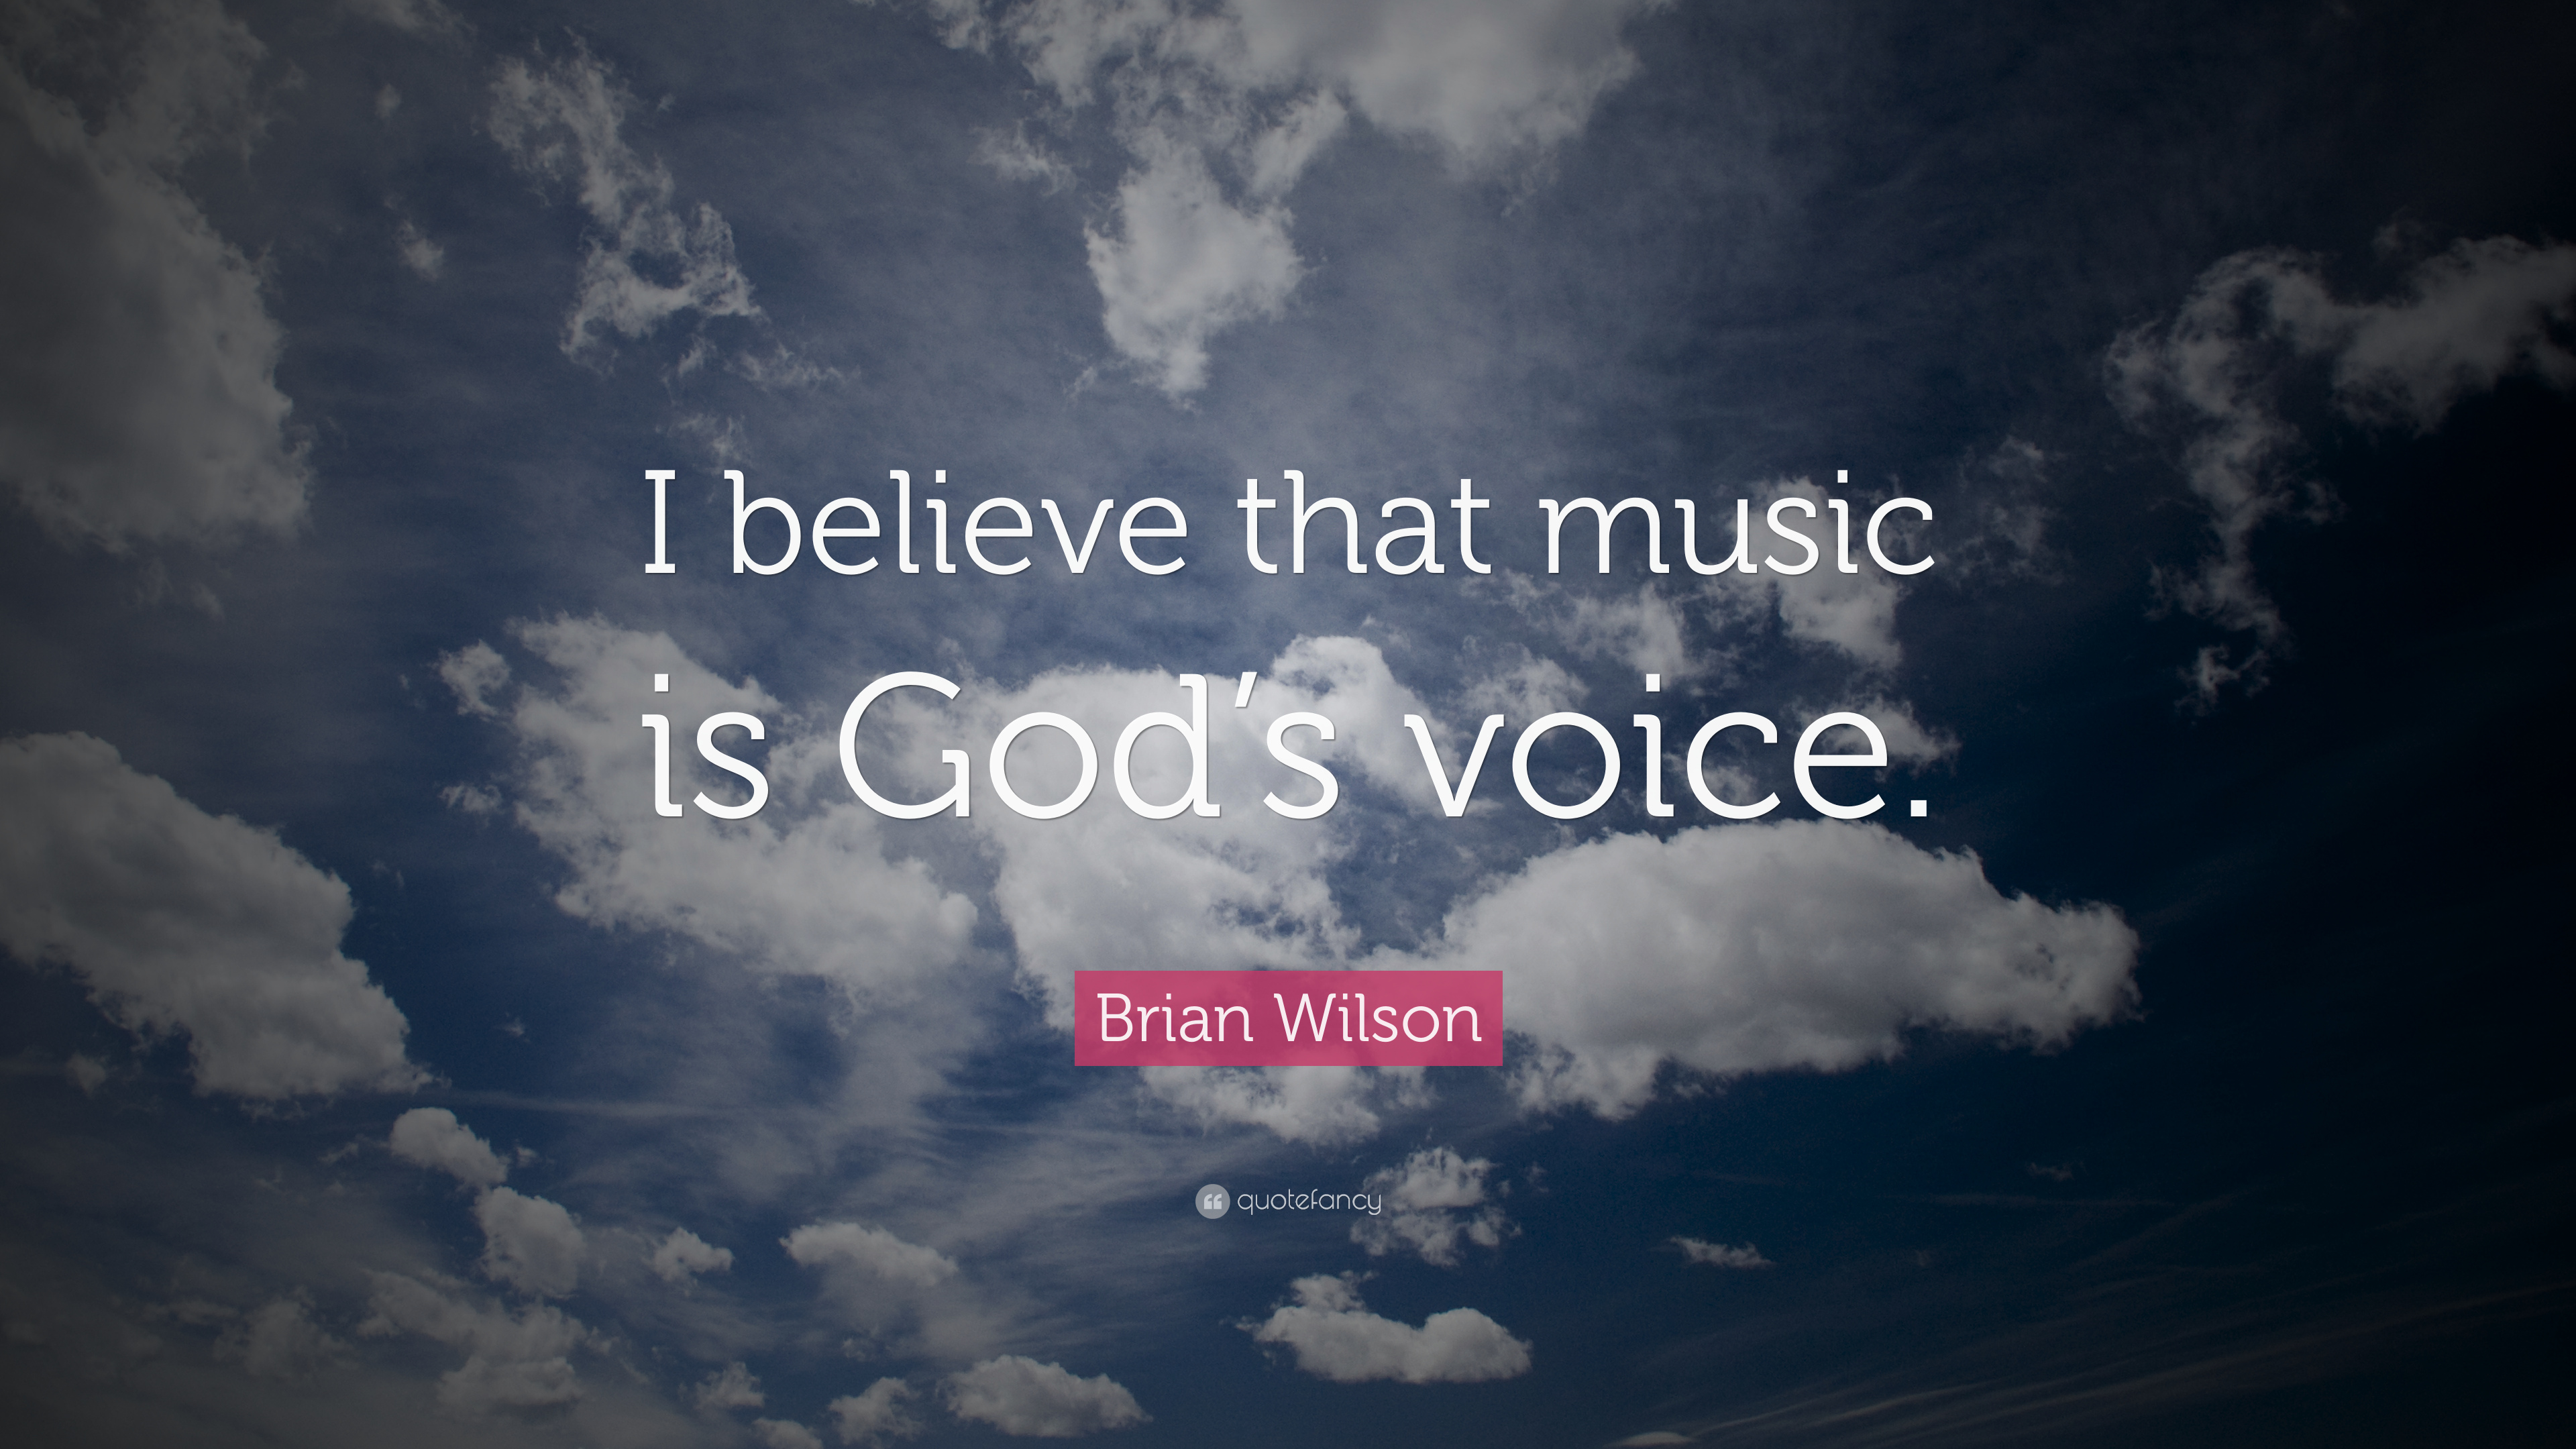 10 Best Brian Wilson Quotes